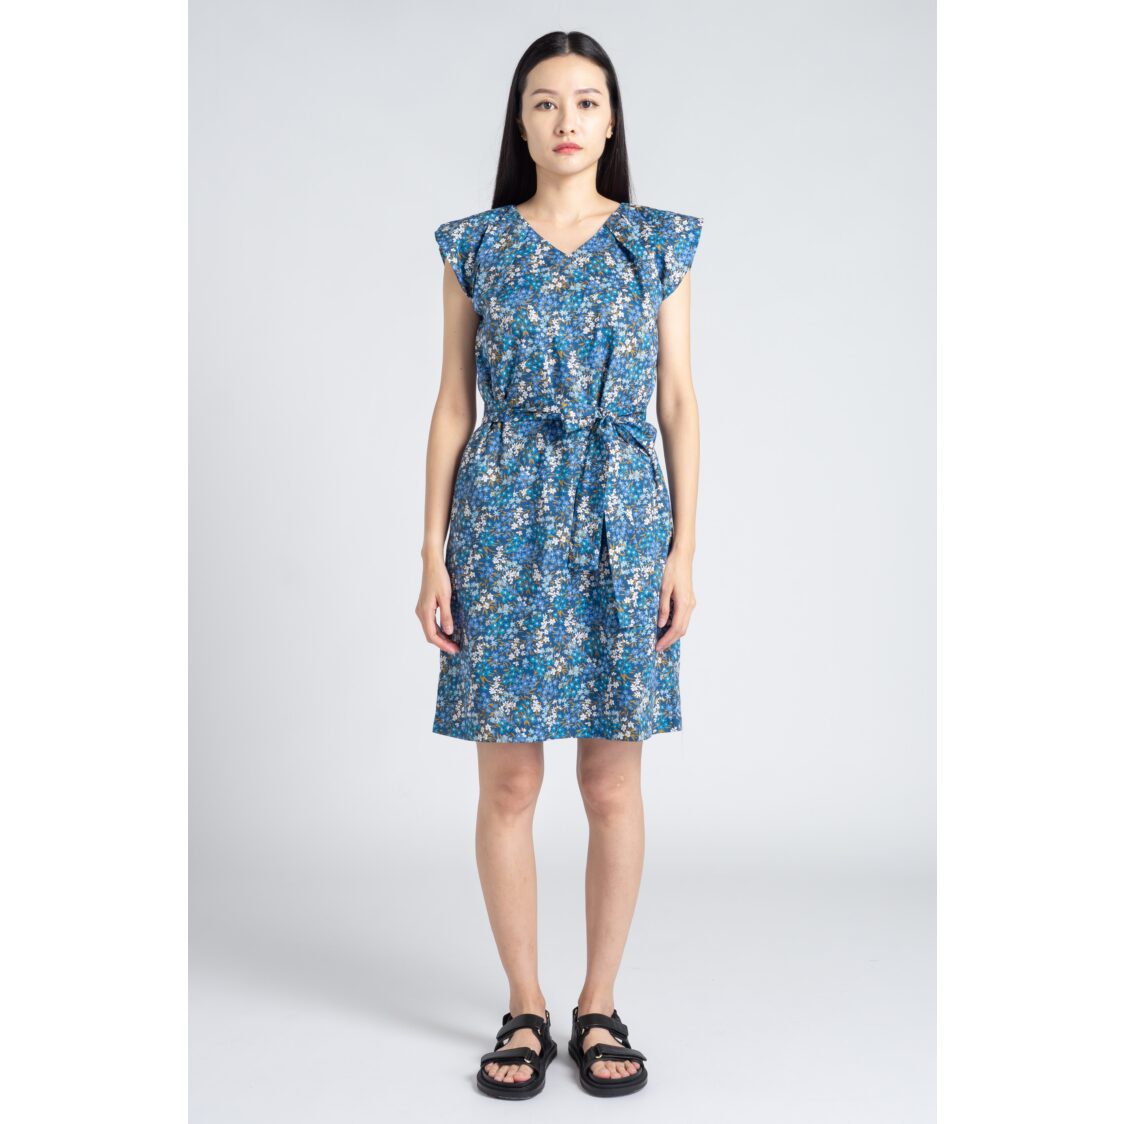 Kurt Woods Made With Liberty Fabric Sleeveless Dress Sea Blossom